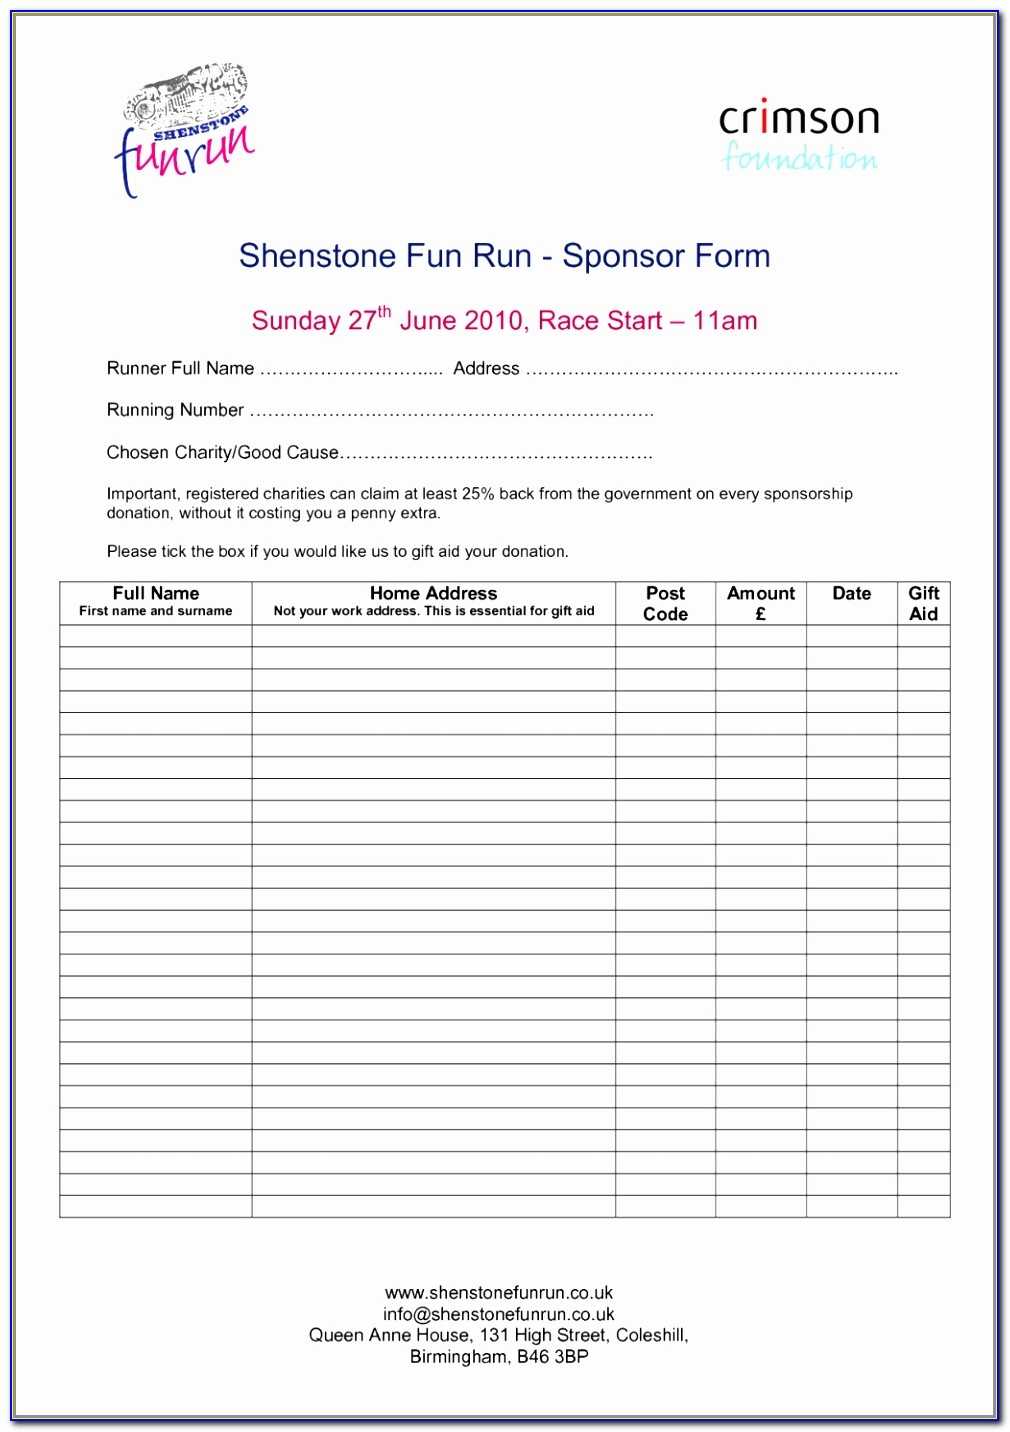 Sample Sponsorship Form Informatics Pharmacist Sample Resume In Blank Sponsorship Form Template